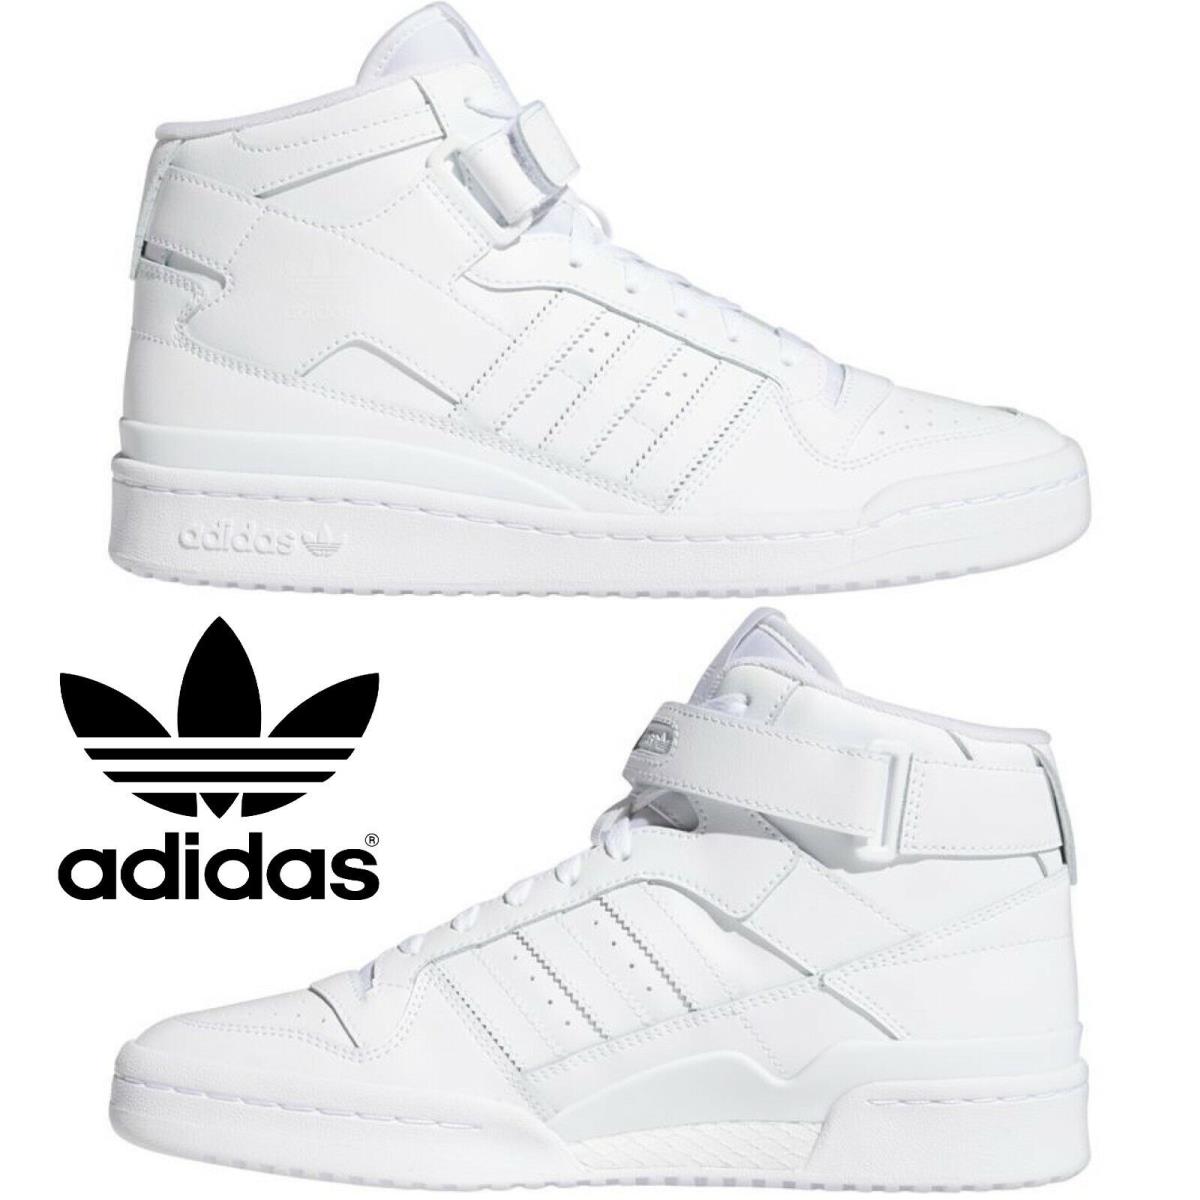 Adidas Originals Forum Mid Men`s Sneakers Comfort Casual Shoes High Top White